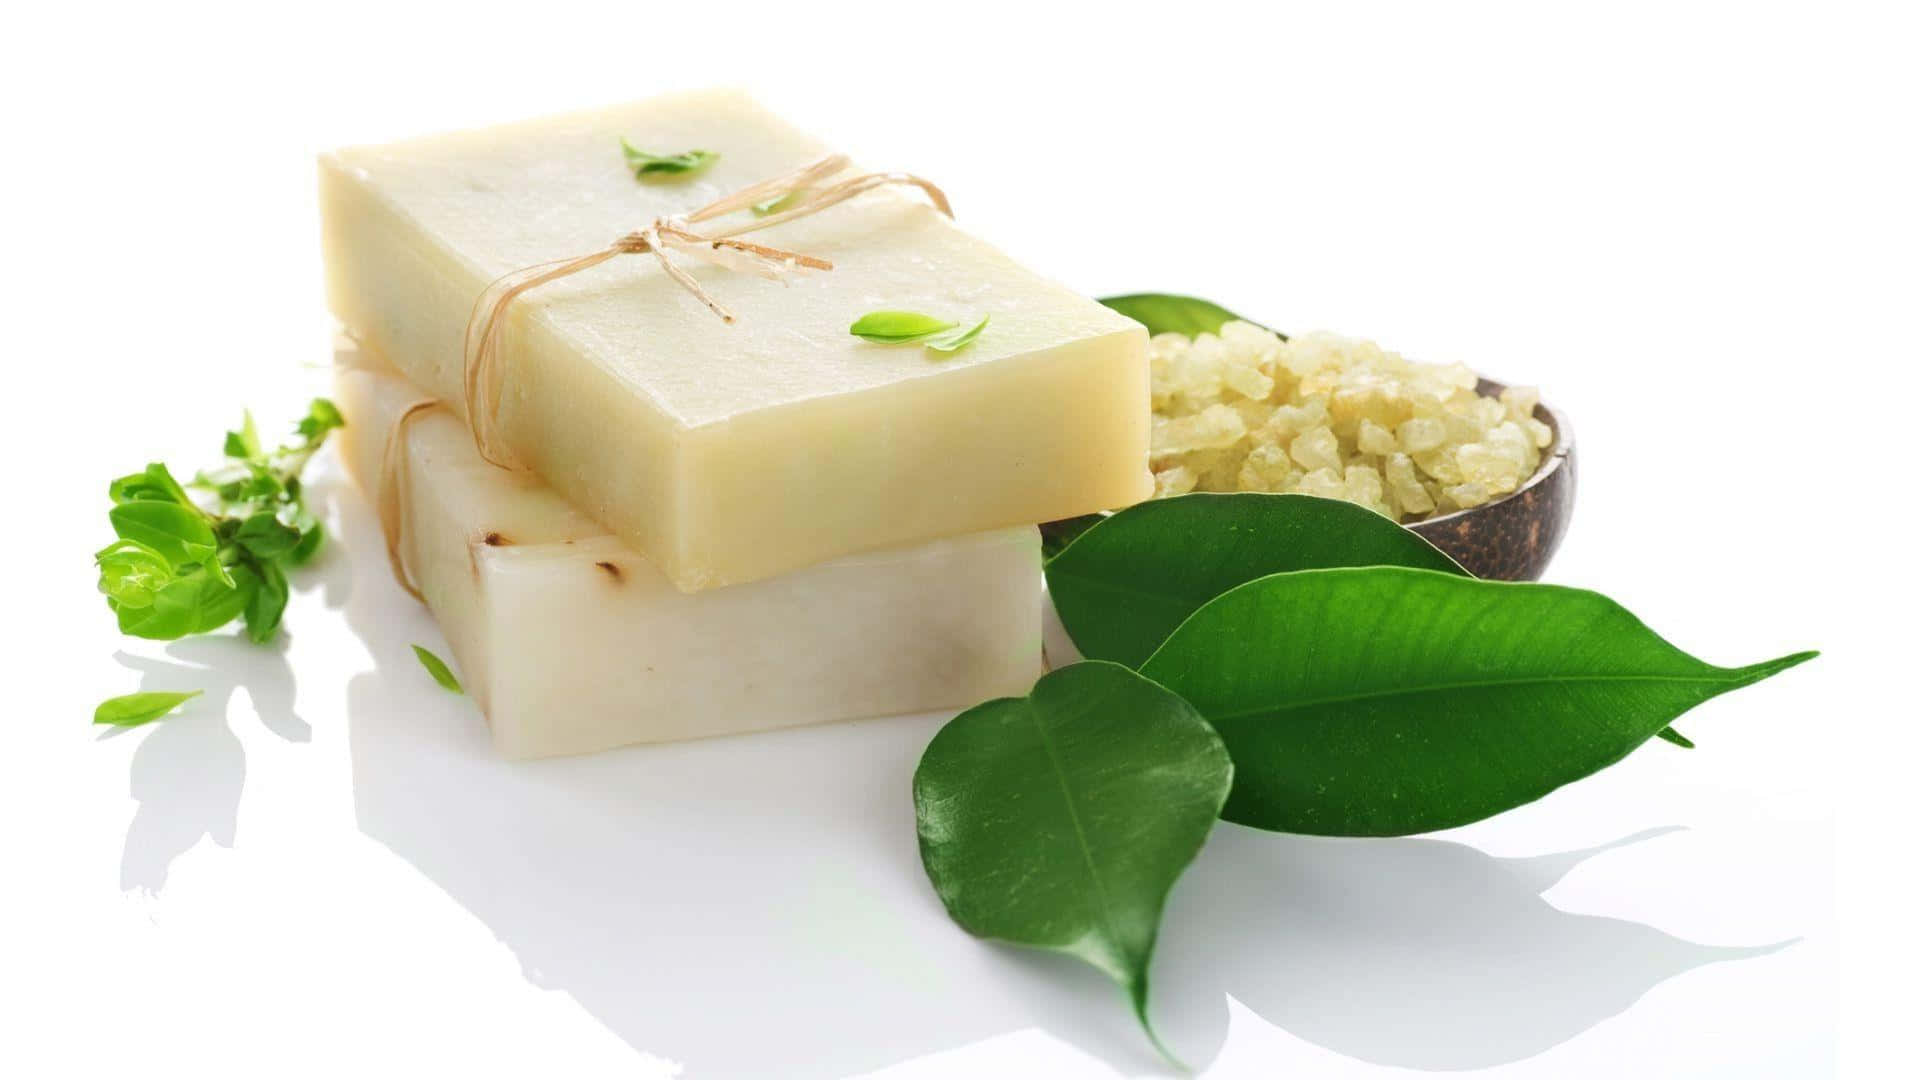 "Natural Homemade Herbal Soap: Eco-friendly, Skin Nourishing Experience" Wallpaper